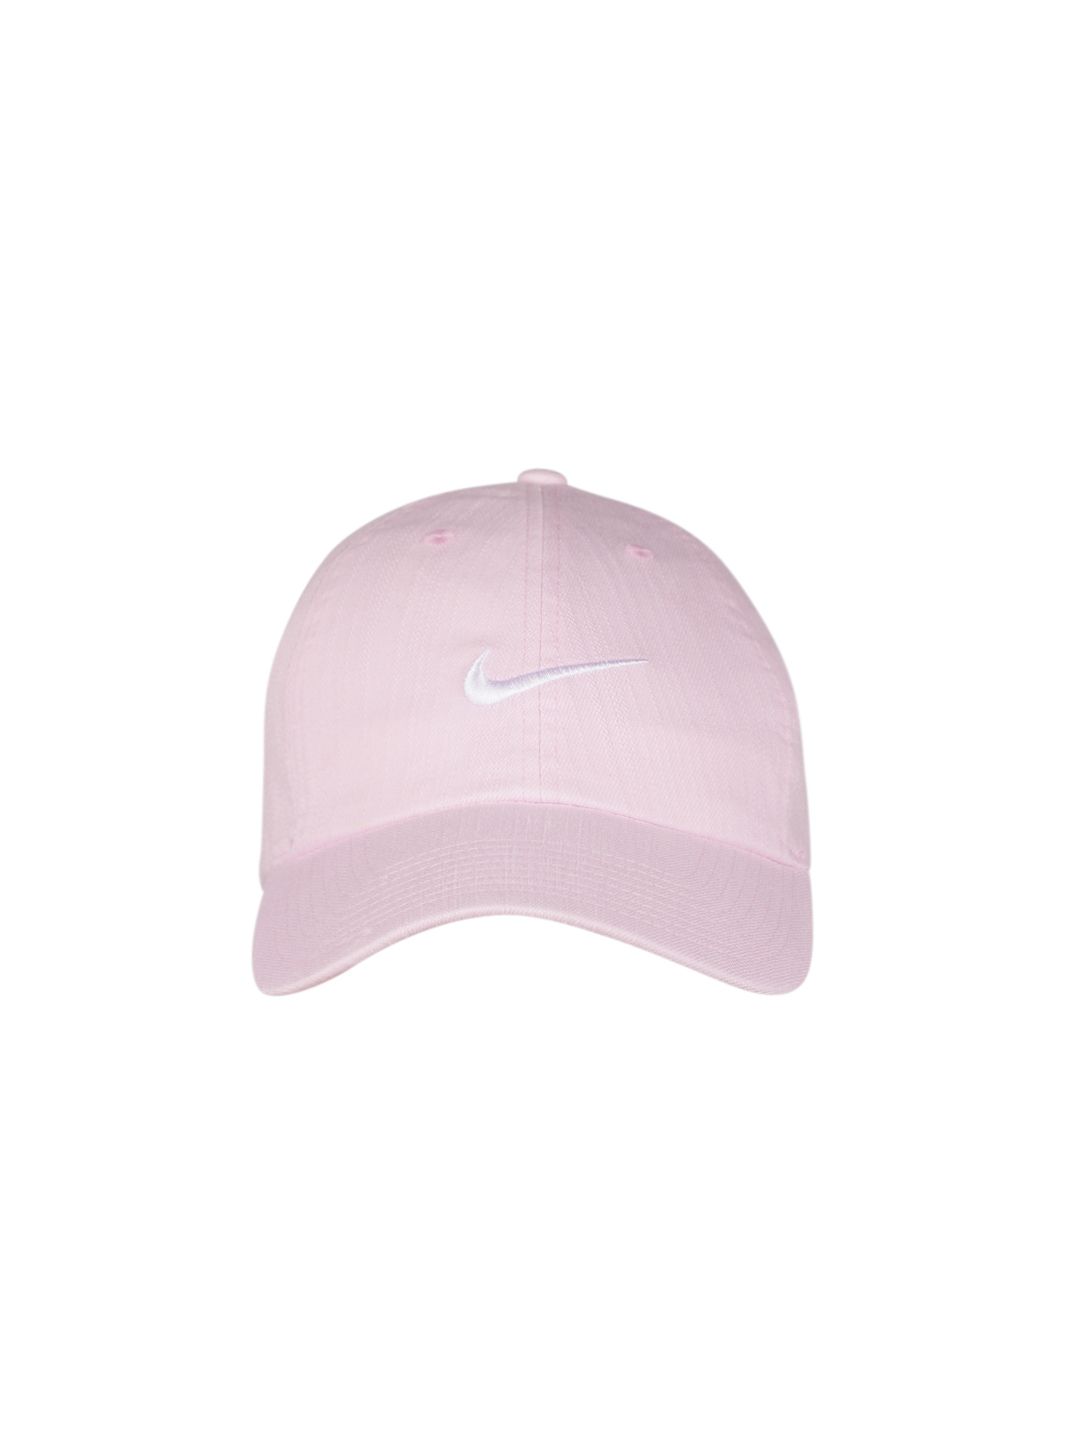 Nike Unisex Pink Solid Denim Baseball Cap Price in India